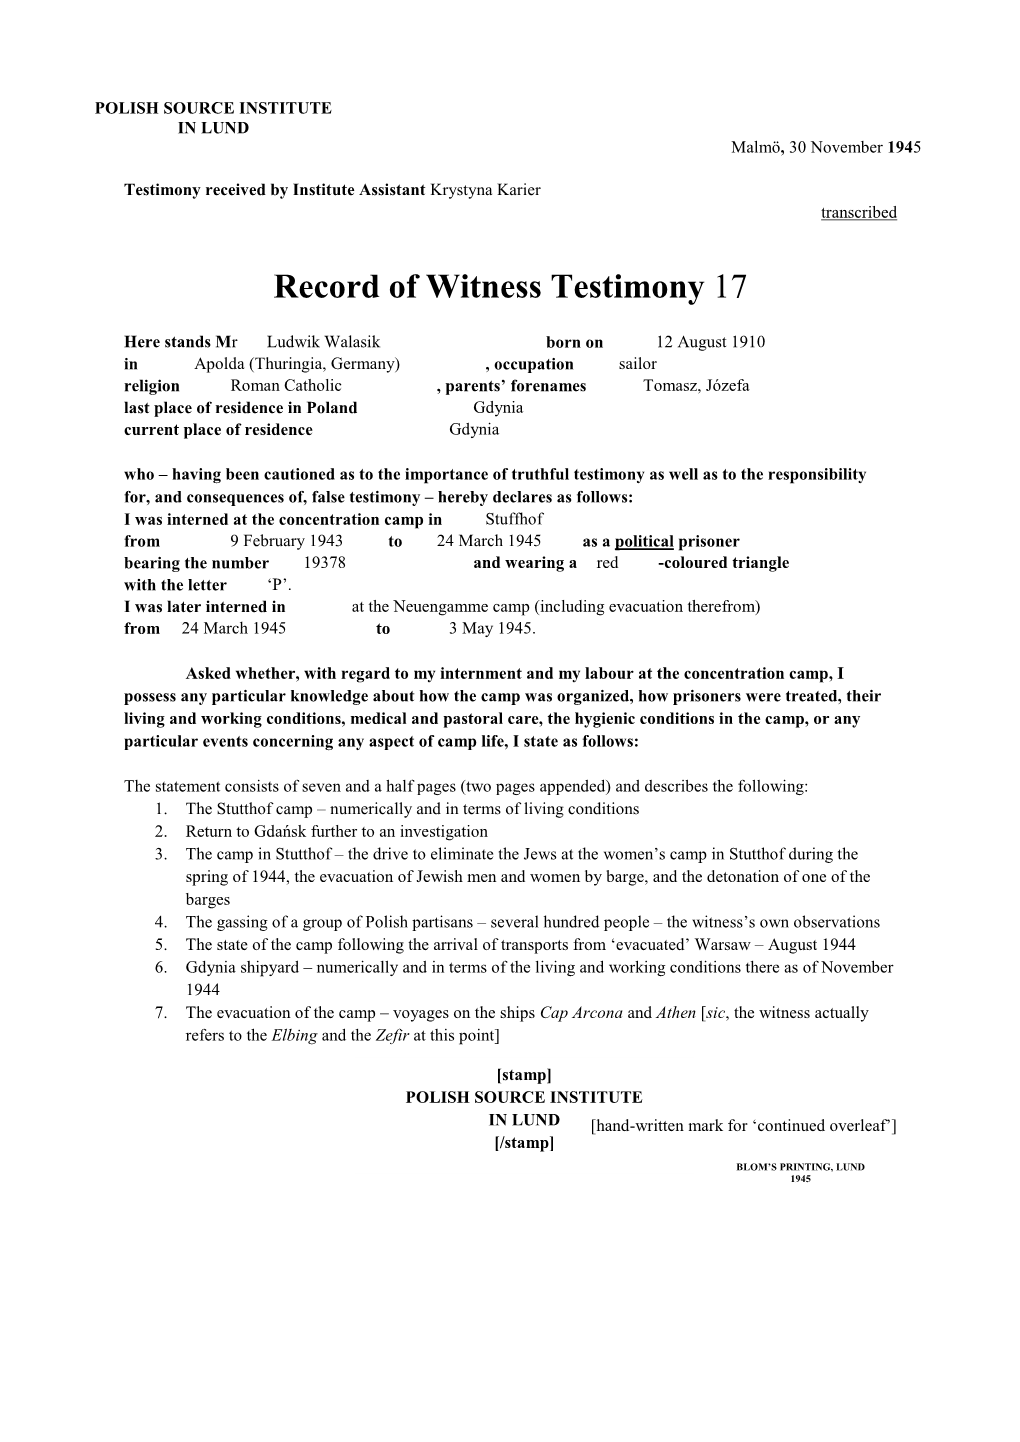 Record of Witness Testimony 17